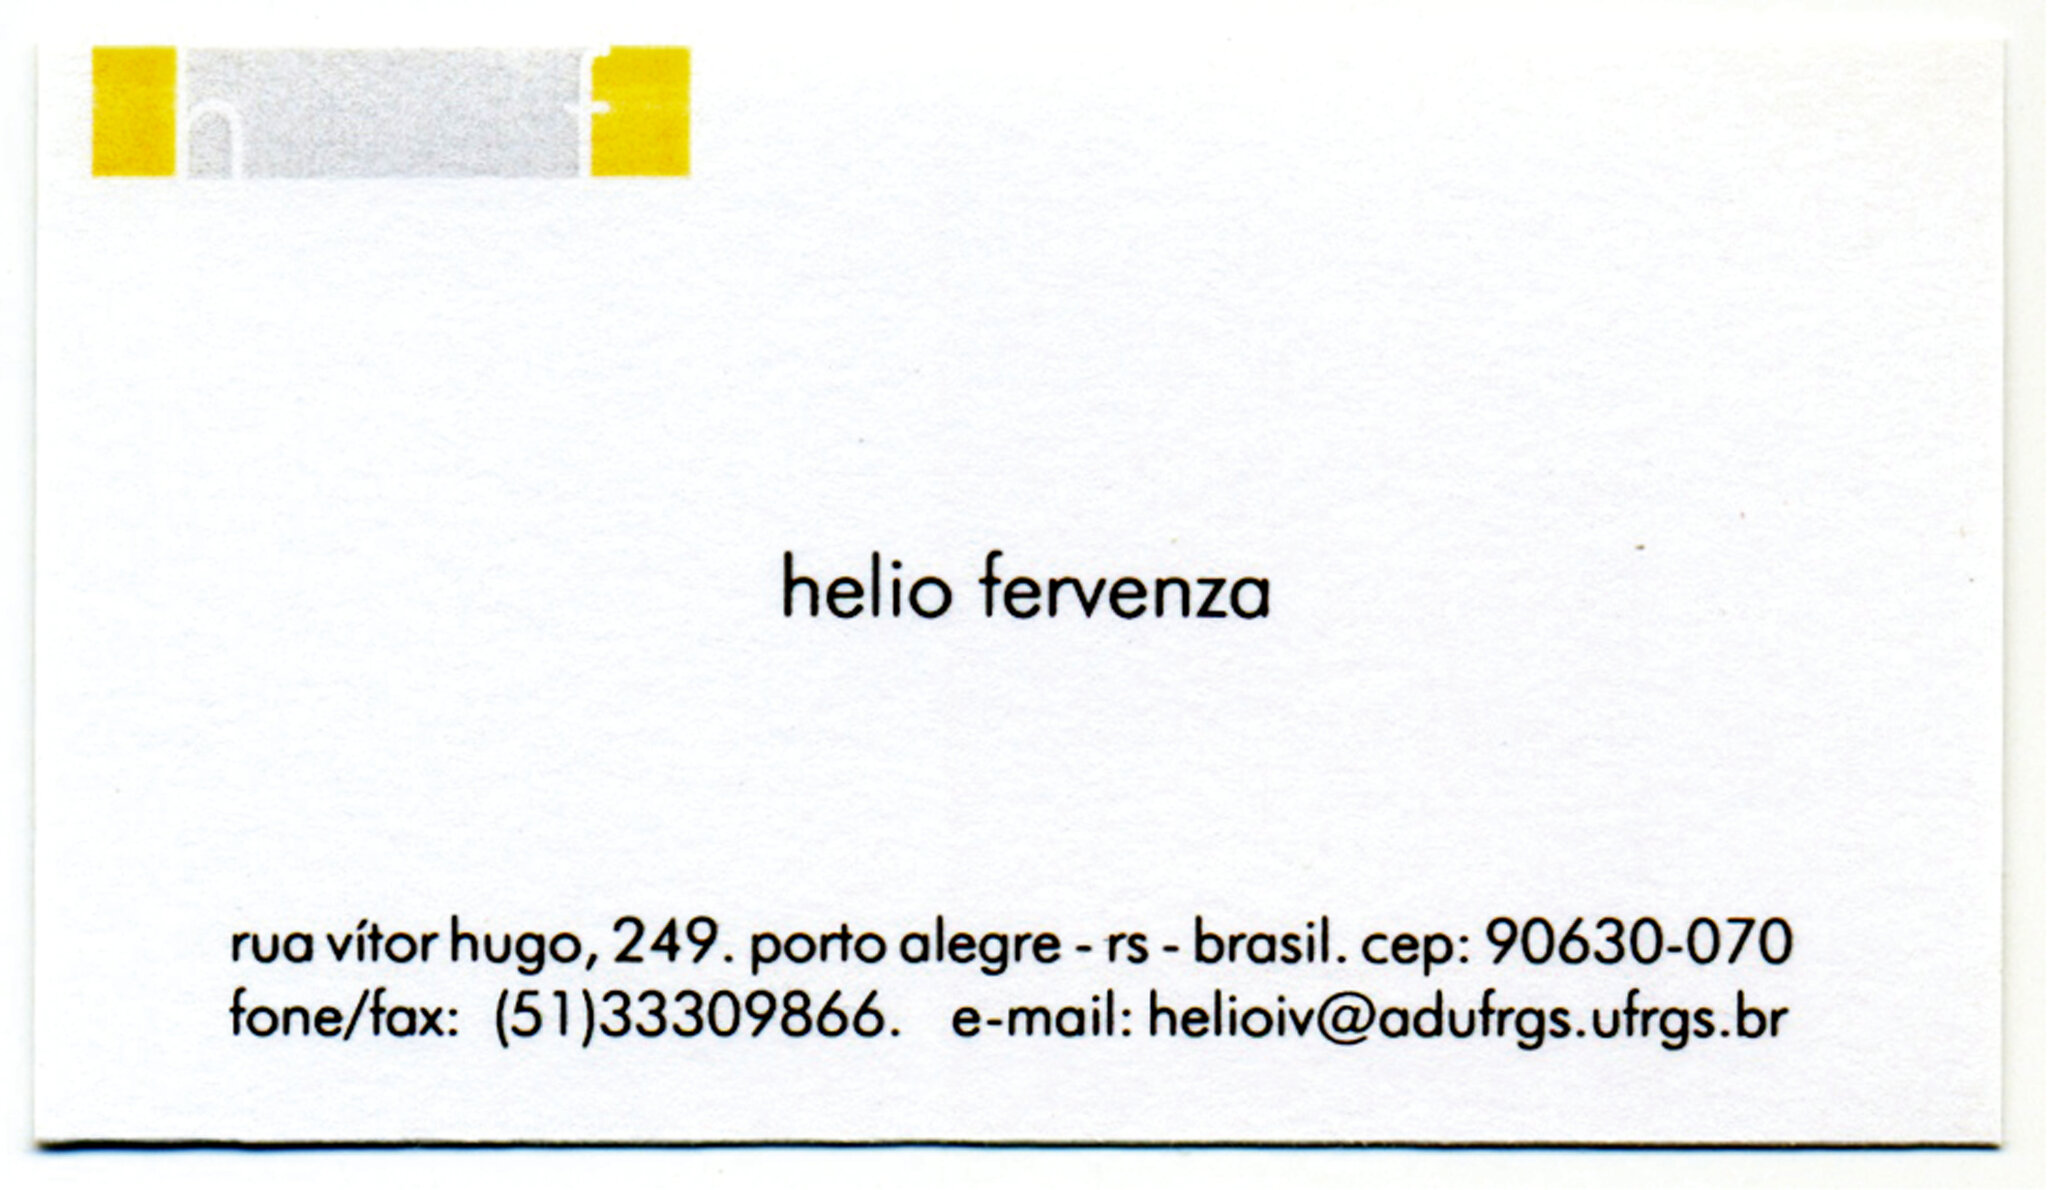 5 - Hélio Fervenza - Desert Presentations. Card containing name, address and logo.